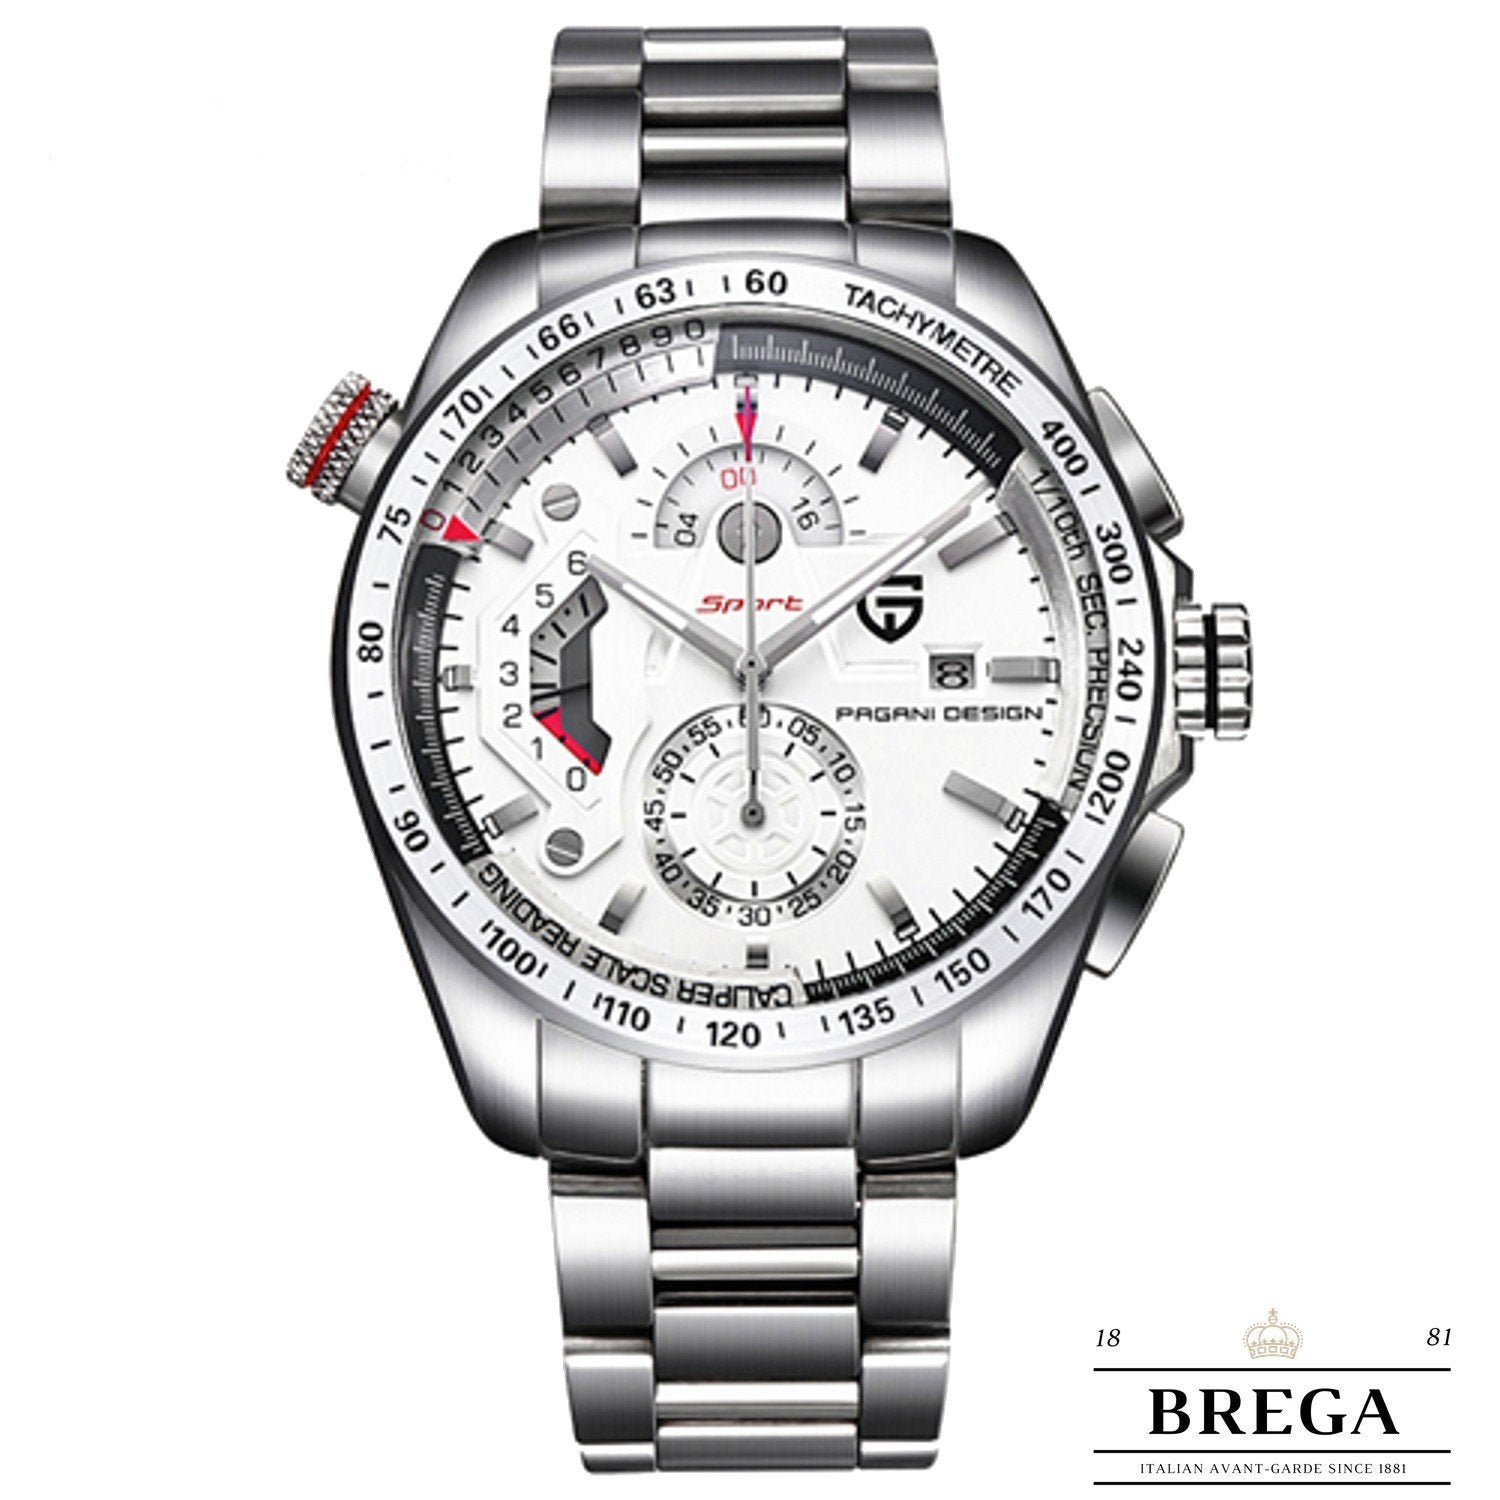 Luxury Brand PAGANI DESIGN Chronograph Sport Watches Men reloj hombre Full Stainless Steel Quartz Watch Clocks 18